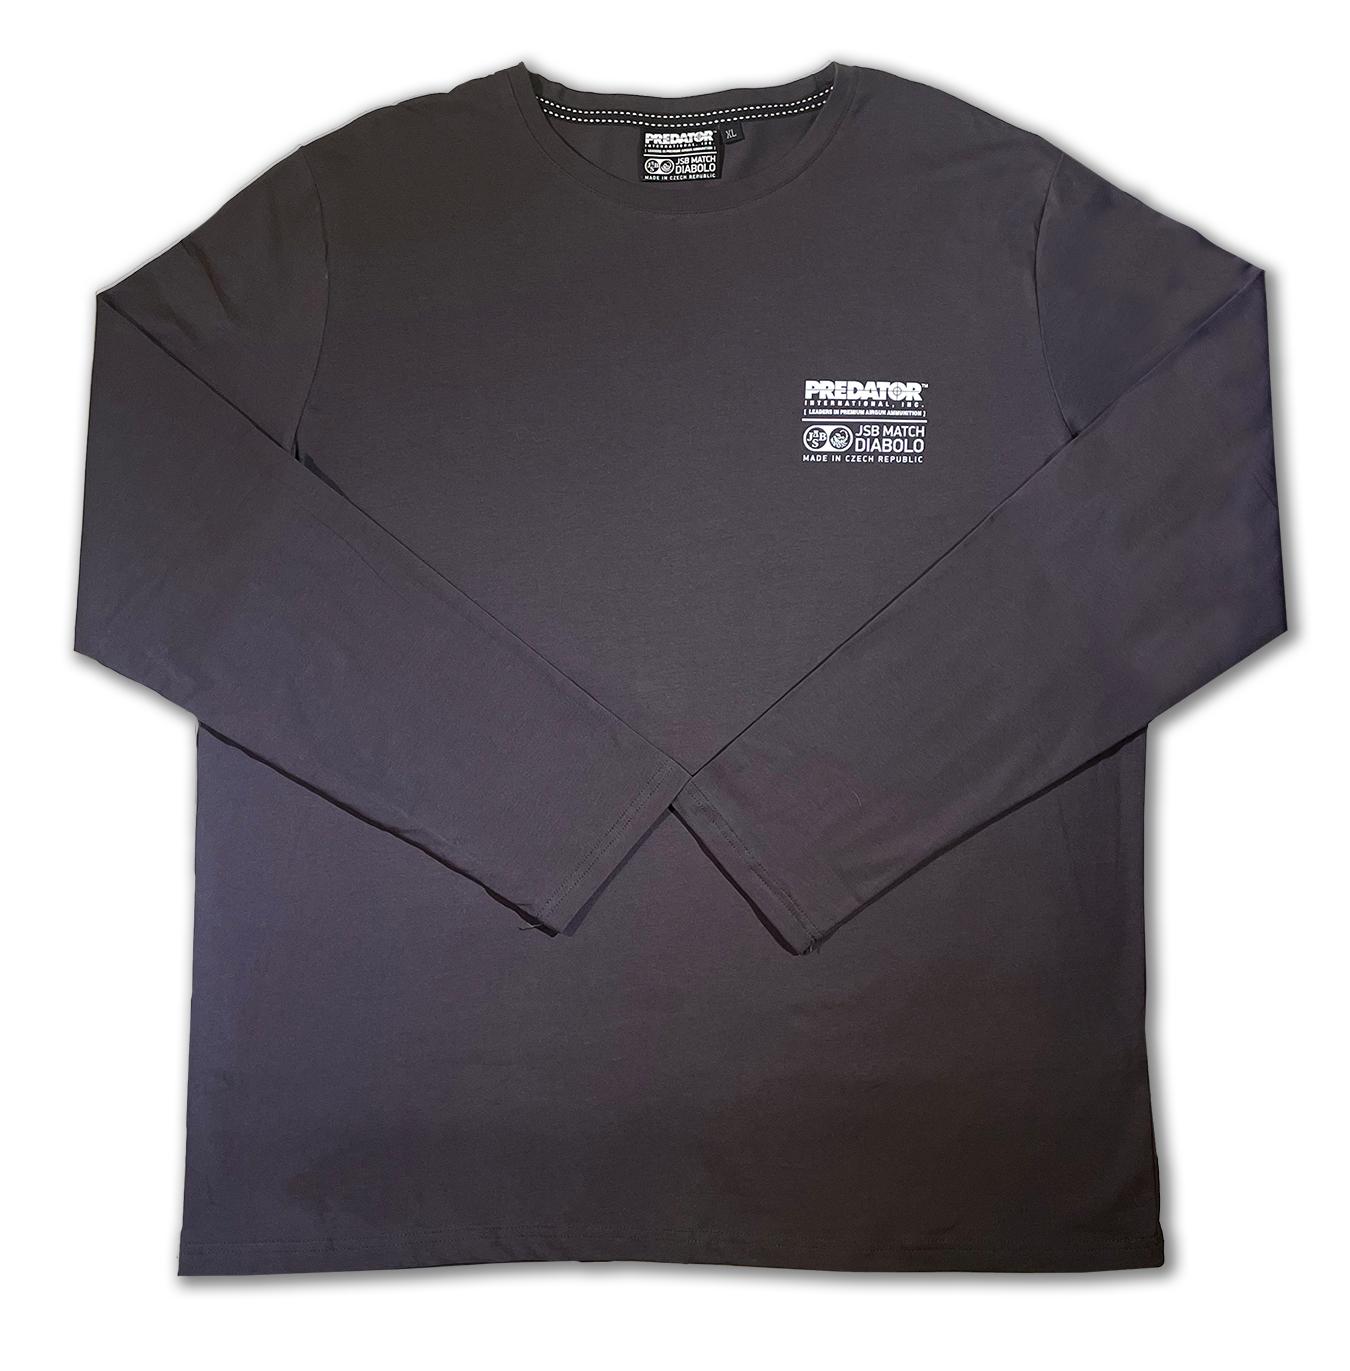 JSB Predator Long Sleeve Cotton/Spandex T-Shirt, Grey, XXL